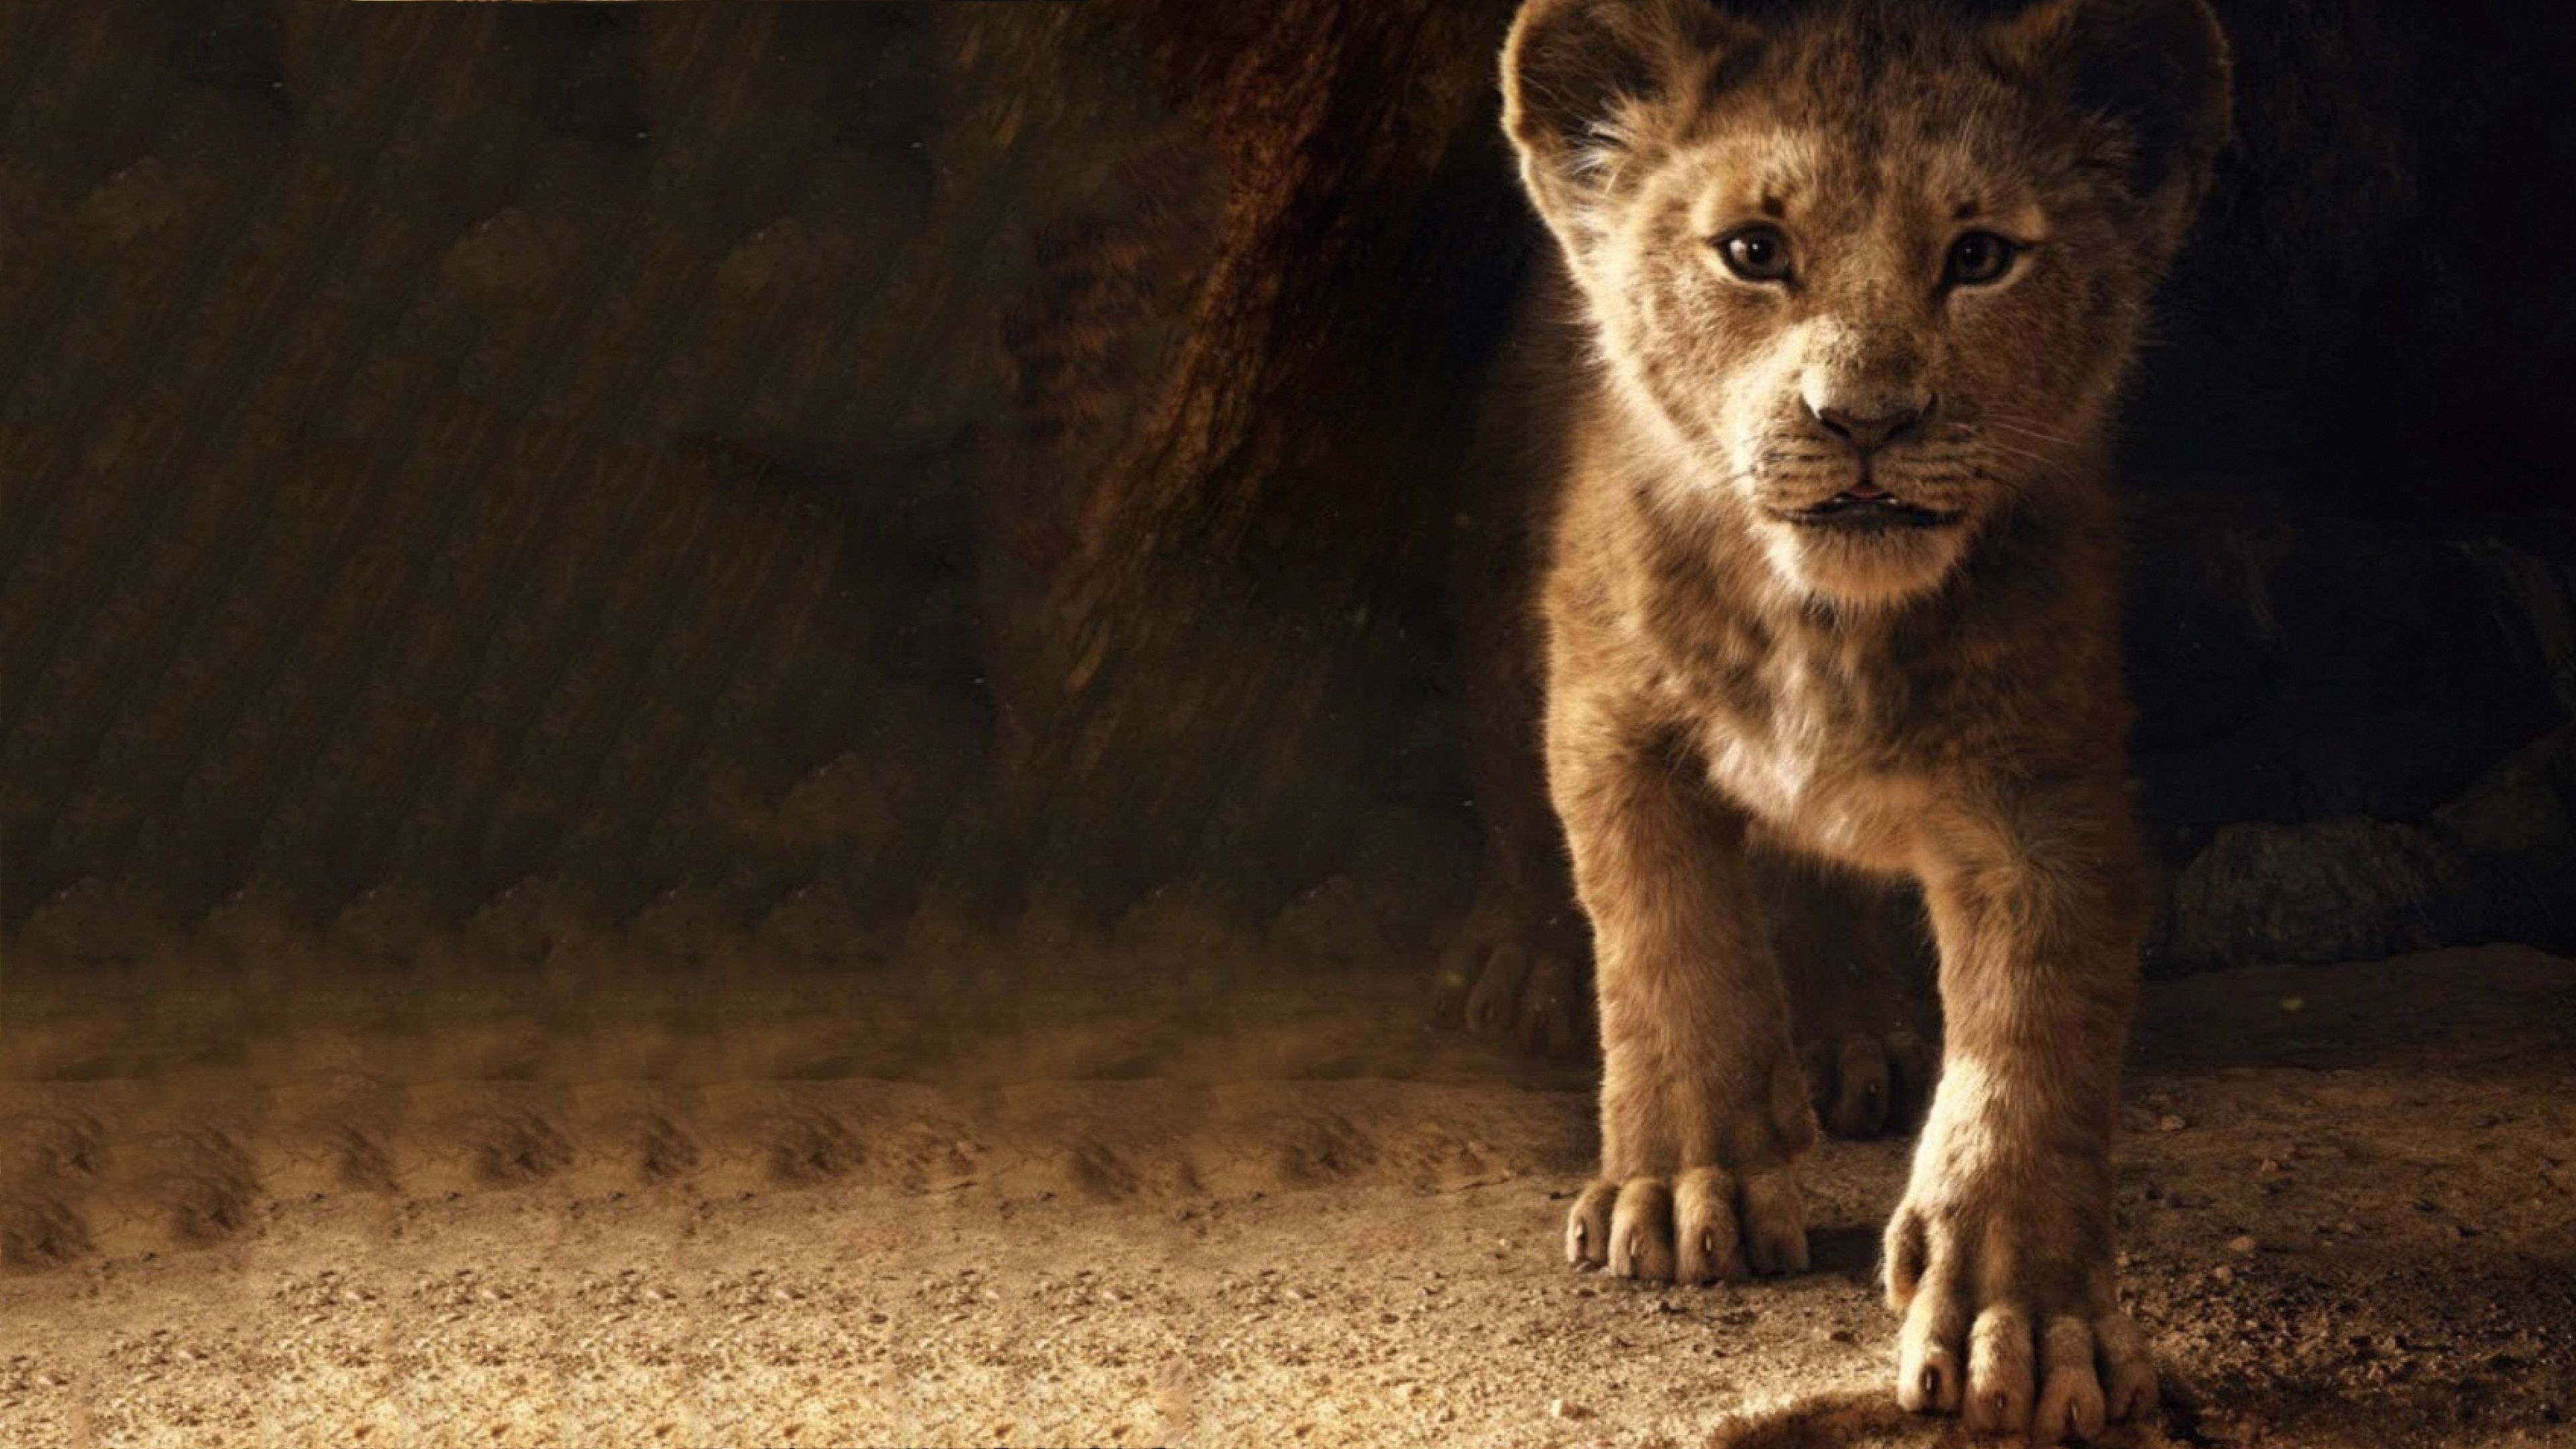 Wallpaper 4k The Lion King Simba 2019 2019 movies wallpaper, 4k